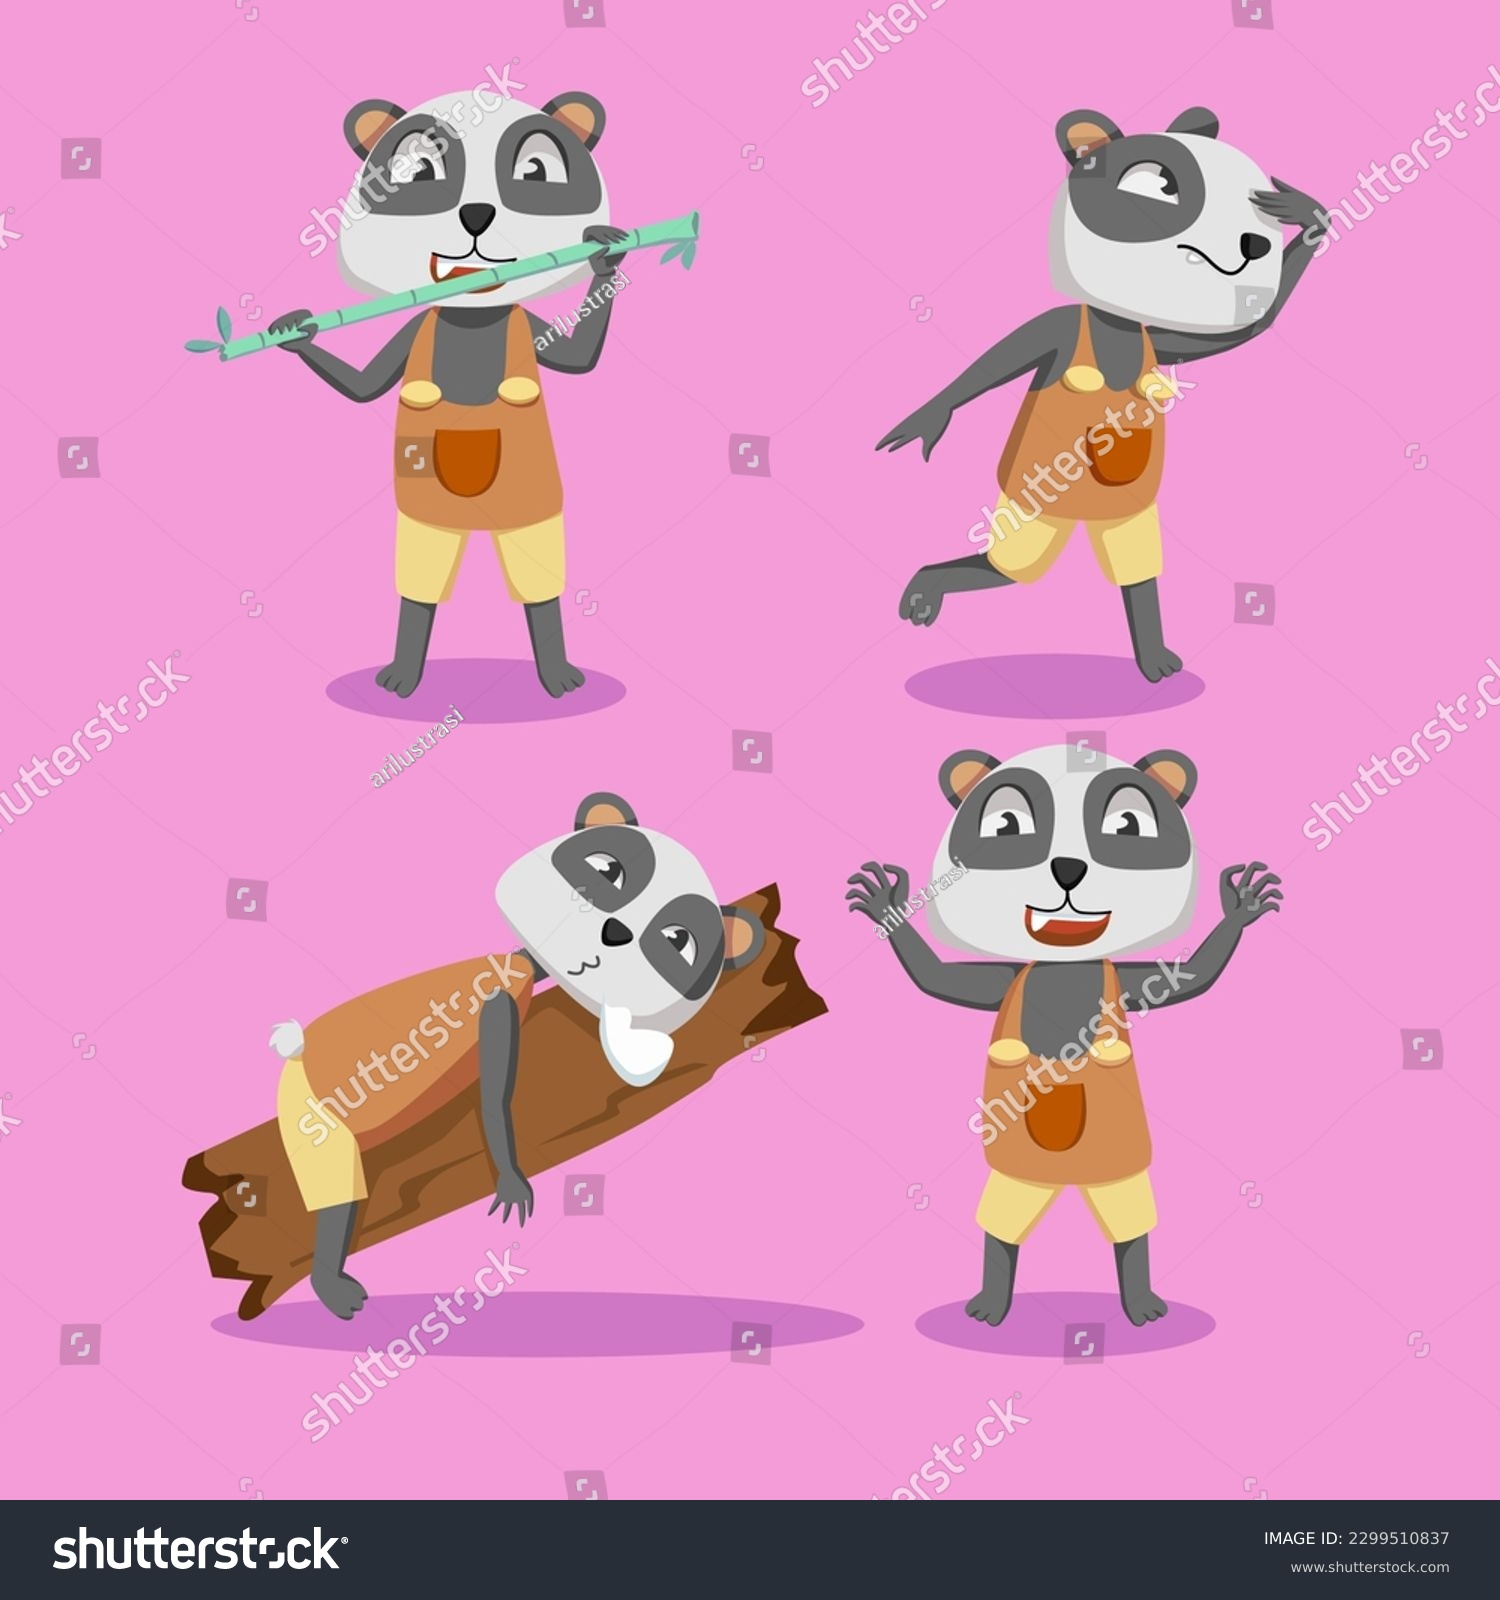 SVG of A cartoon illustration of a Panda with a stick on its back svg